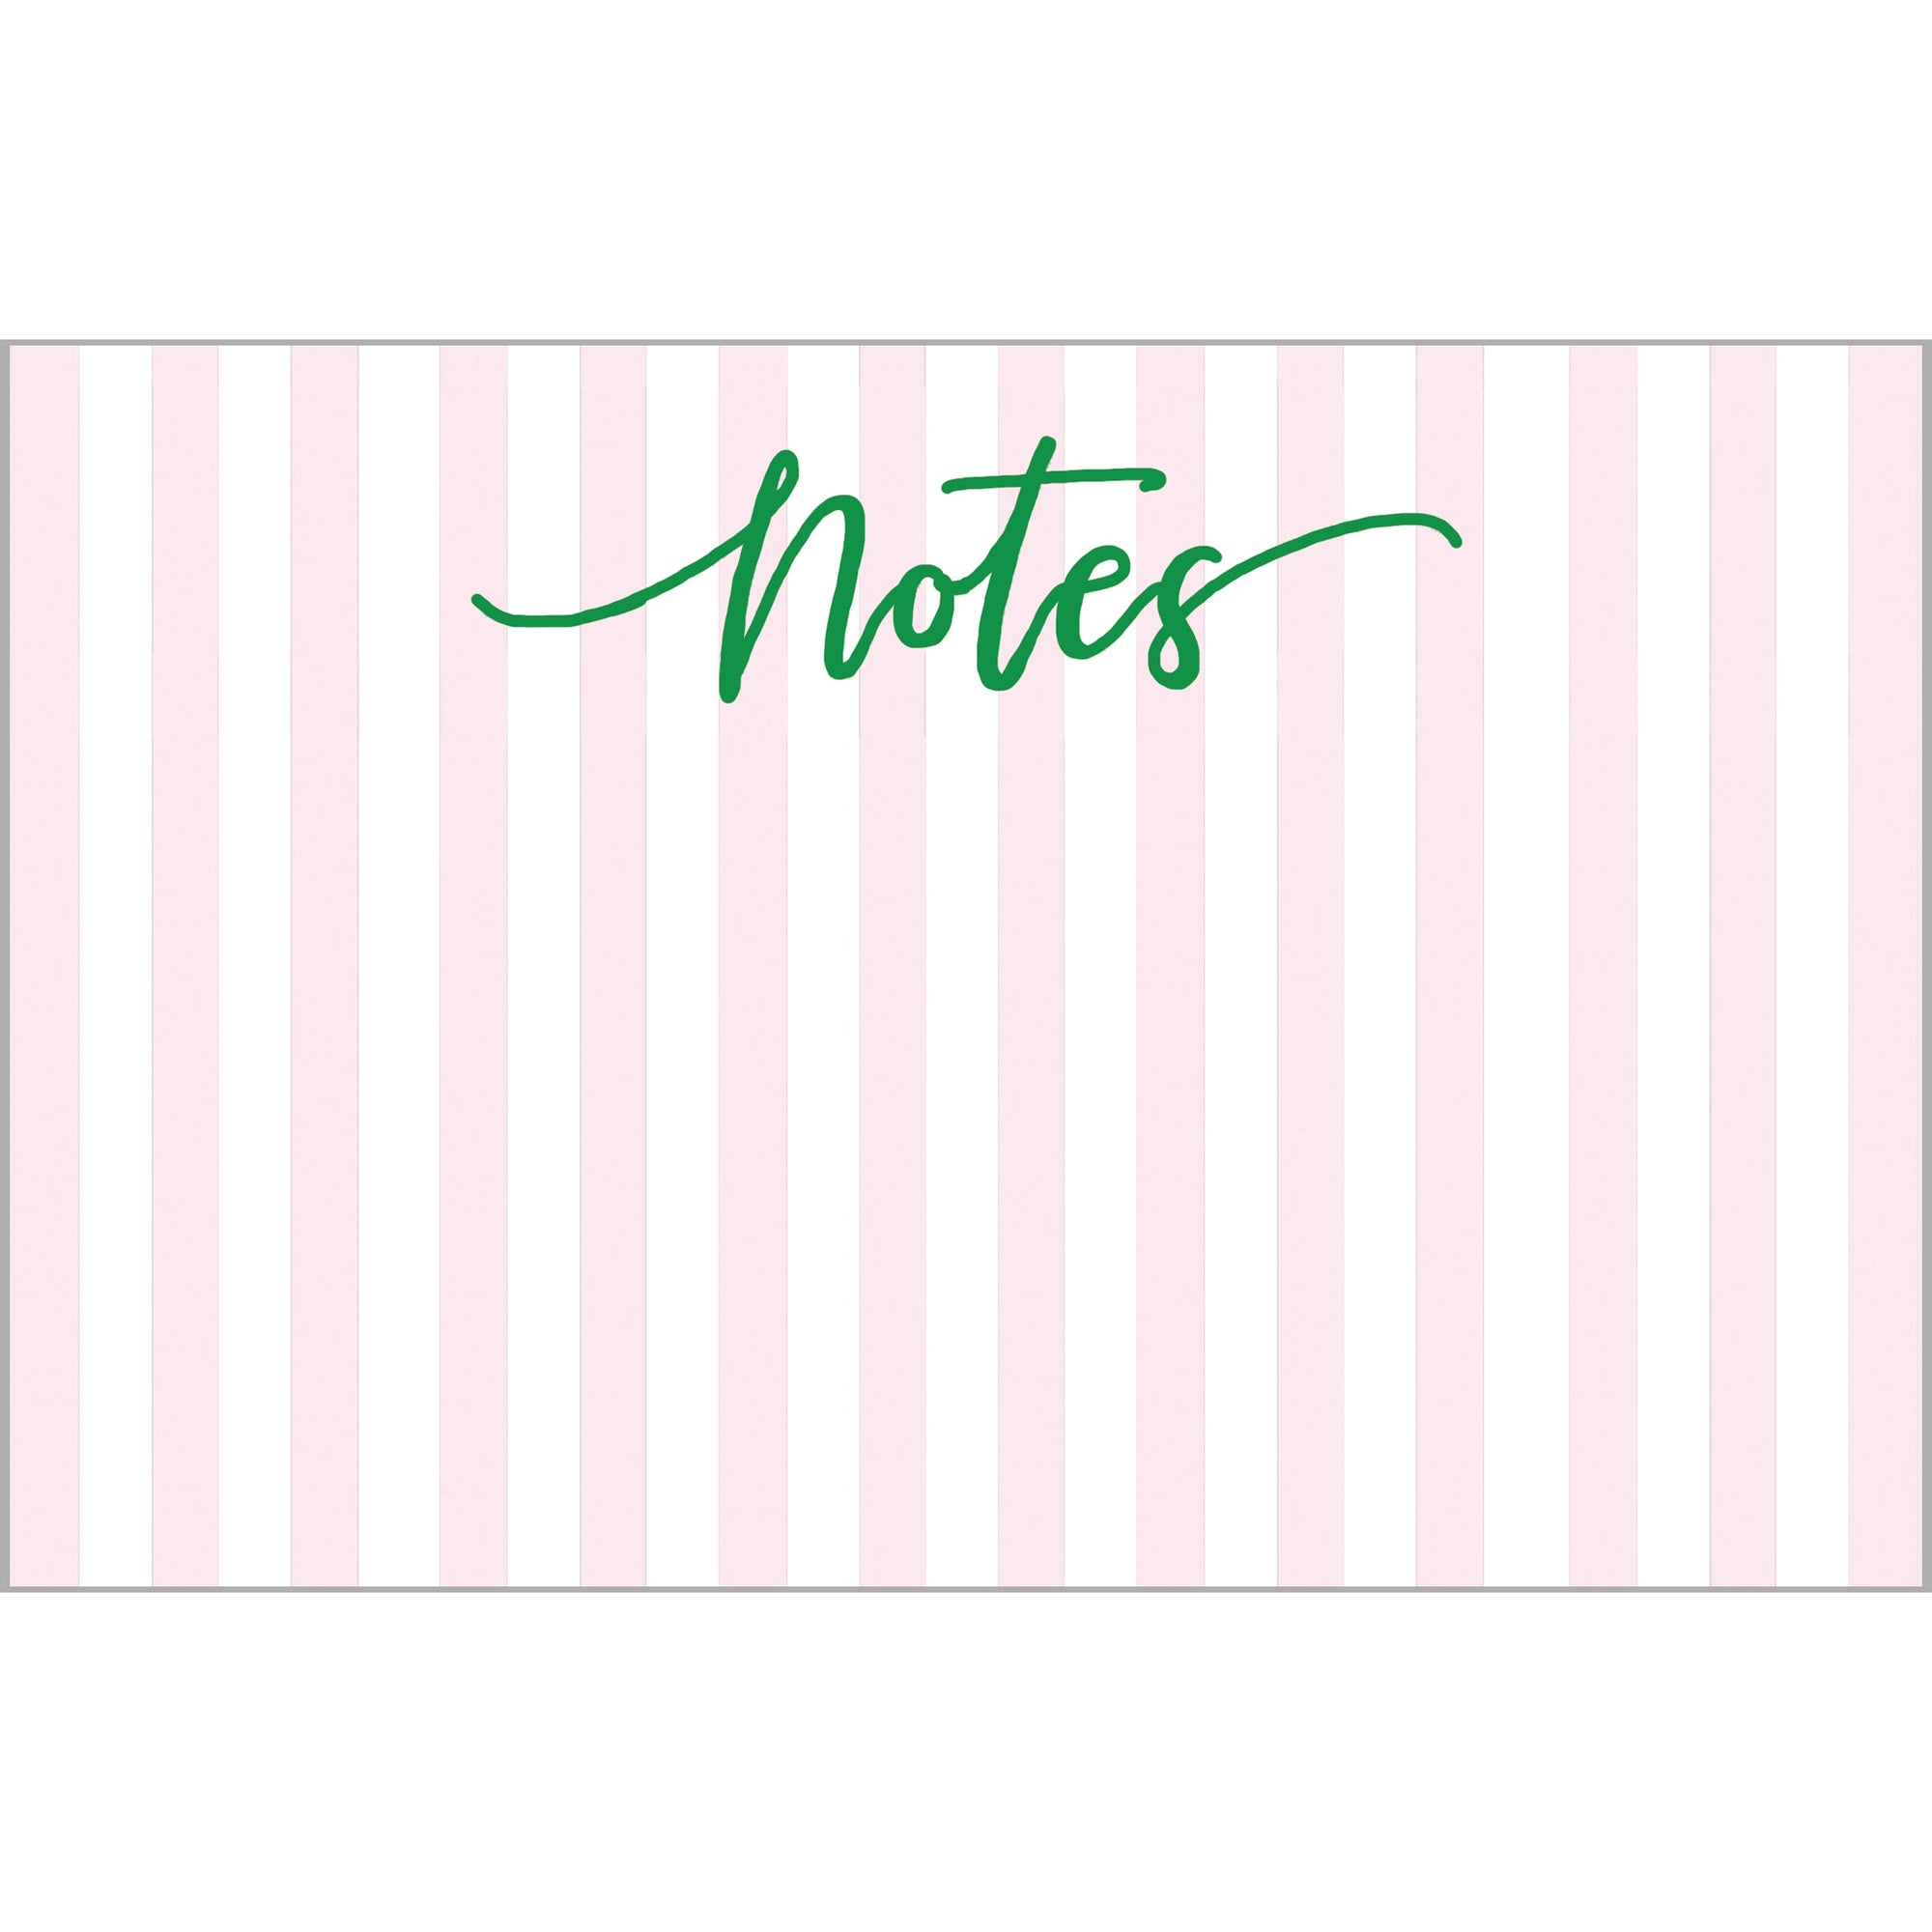 In Stock 8.5x5.5 Cabana Stripes "Notes" Slab Notepad